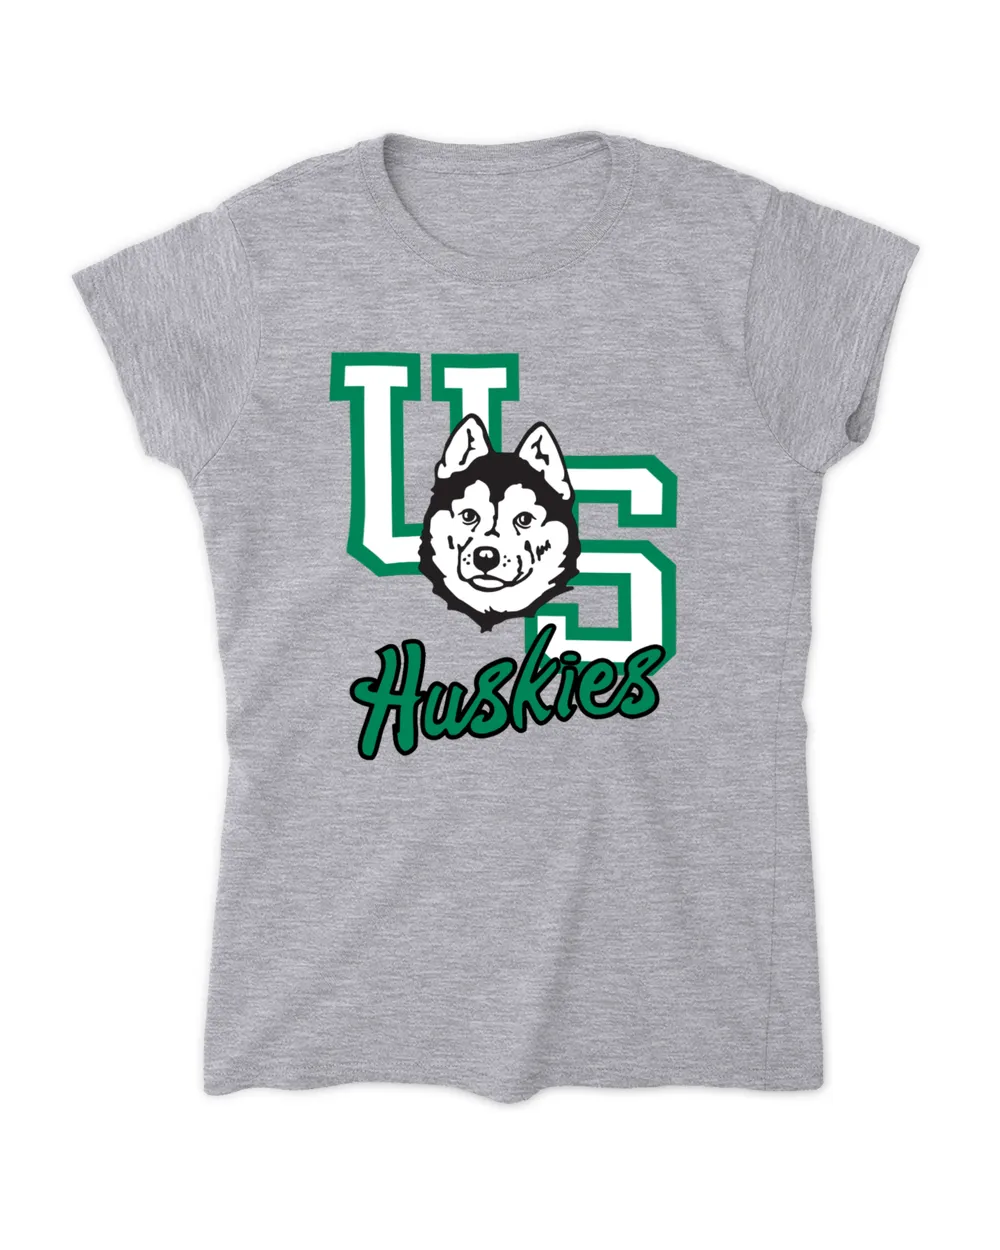 U Of S Huskies T-Shirt Women's Standard T-Shirt sport-grey 